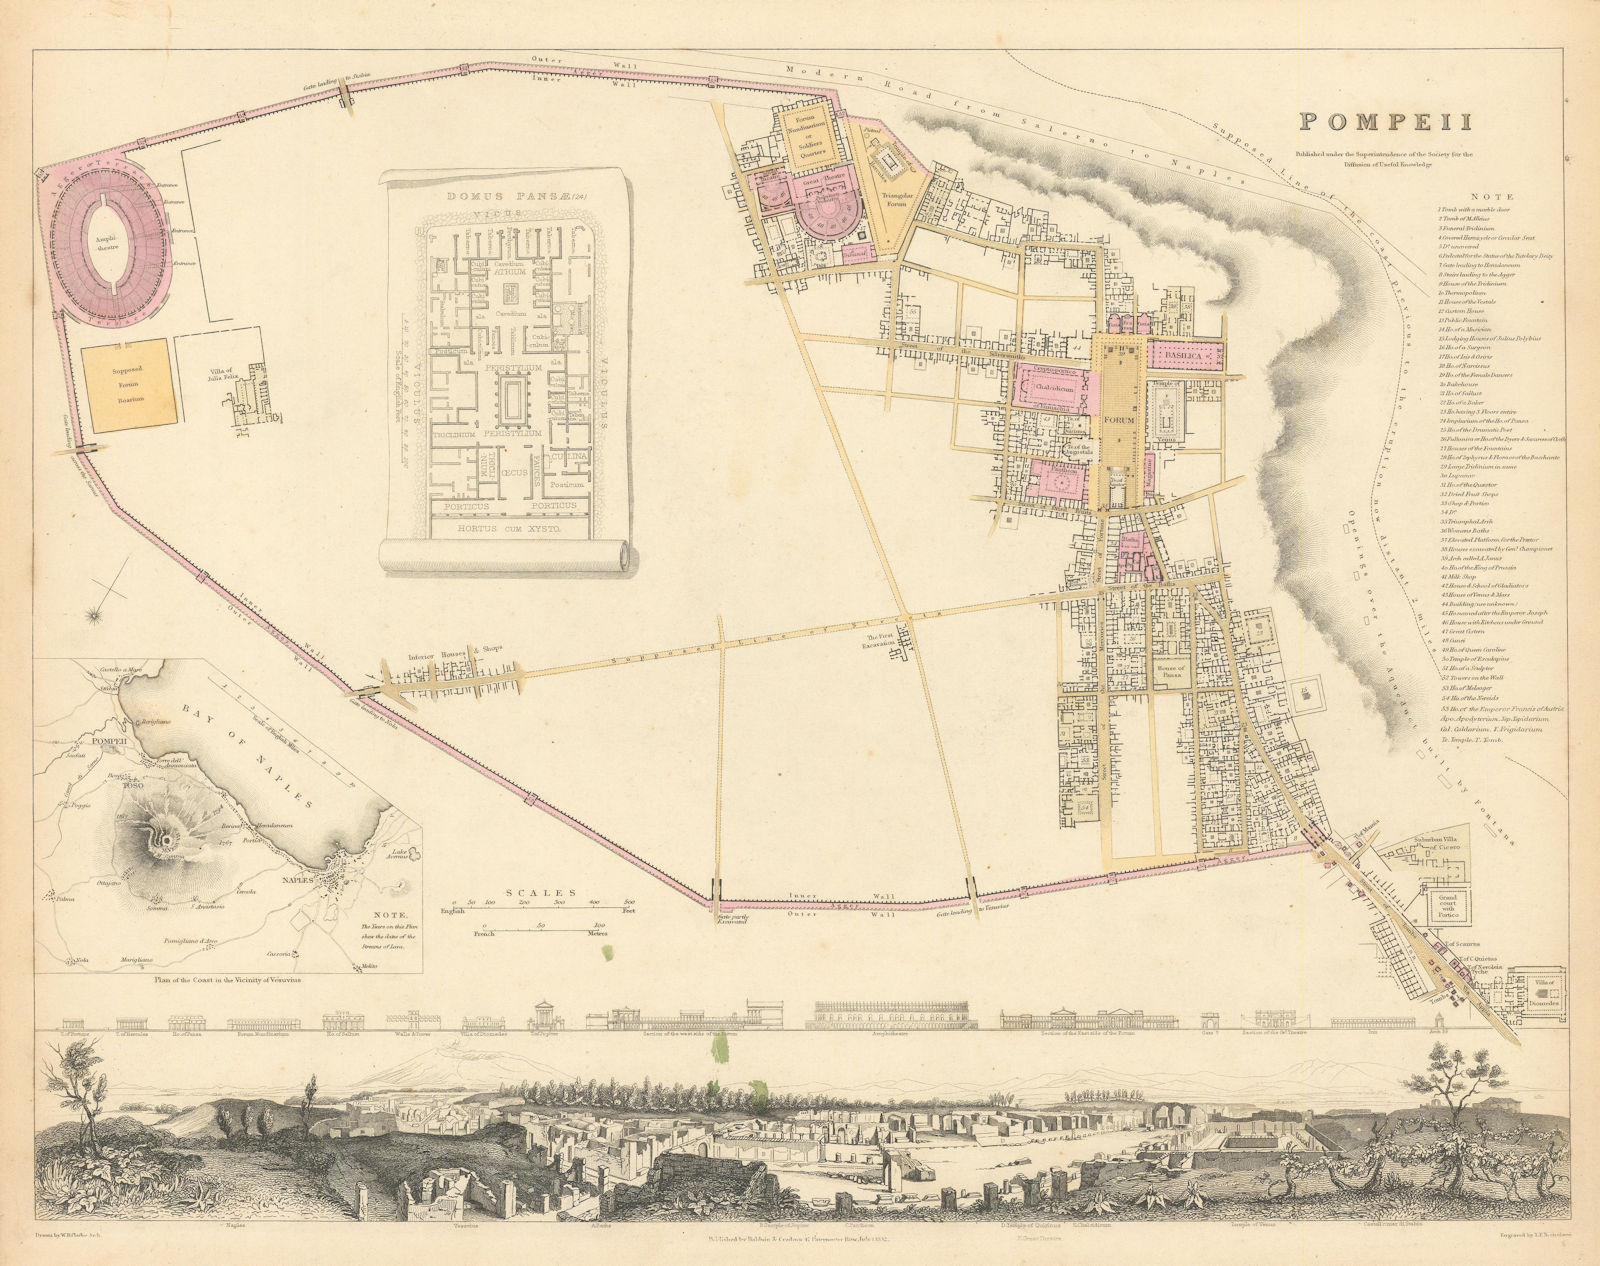 Associate Product POMPEII. Antique town city map & panorama. Domus Pansae;Bay of Naples.SDUK 1844